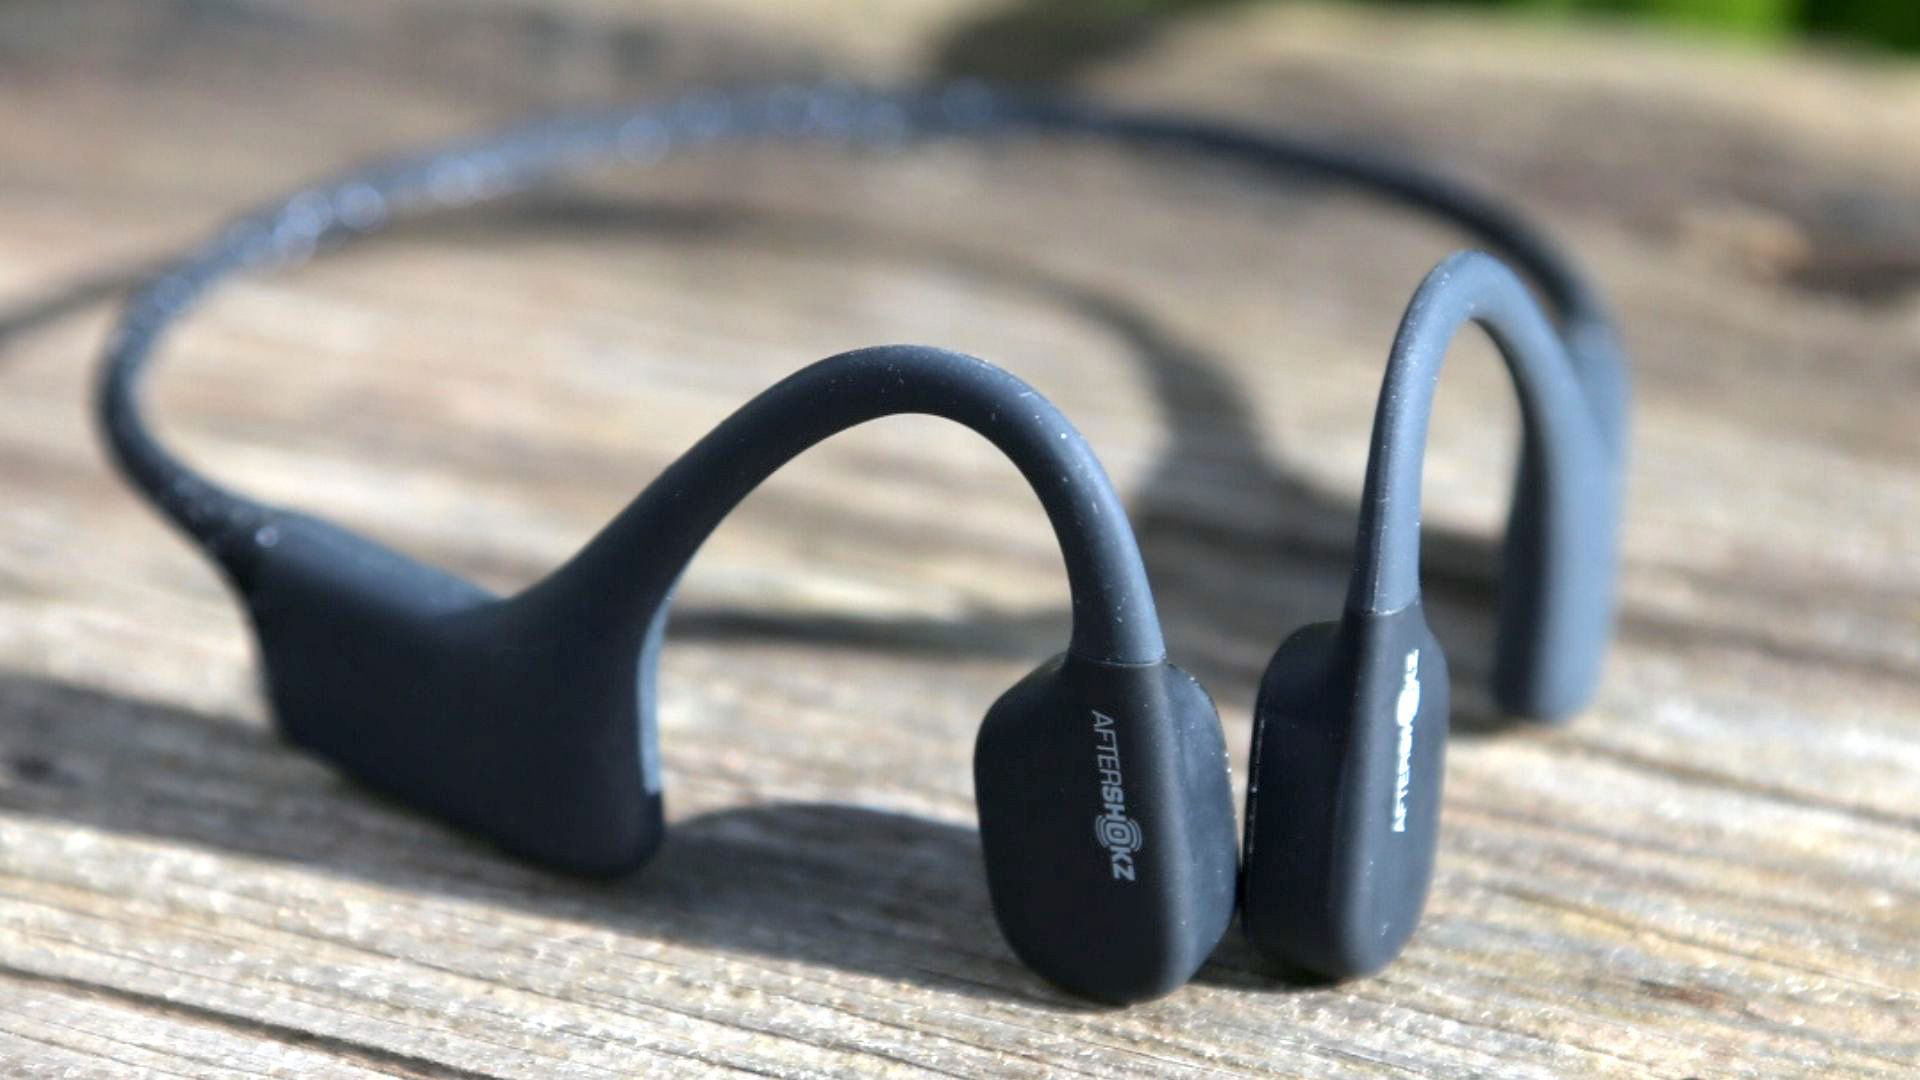 Aftershokz Wireless Headphones - OpenSwim - Black